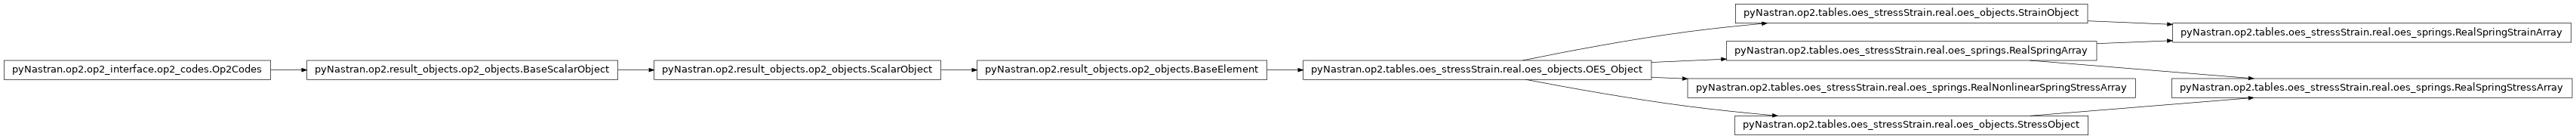 Inheritance diagram of pyNastran.op2.tables.oes_stressStrain.real.oes_springs